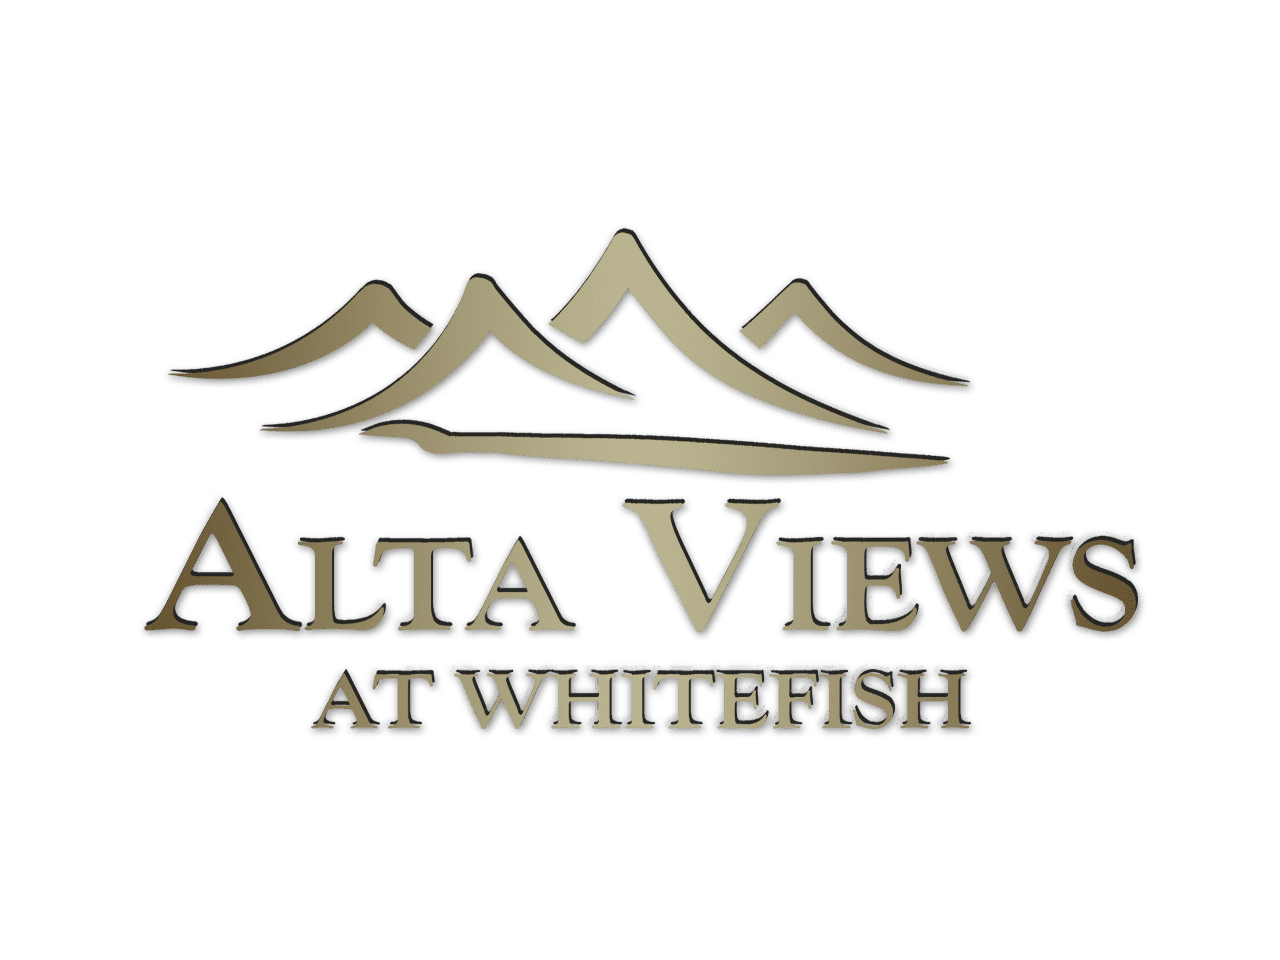 New Orleans Social Media - Alta Views Whitefish 